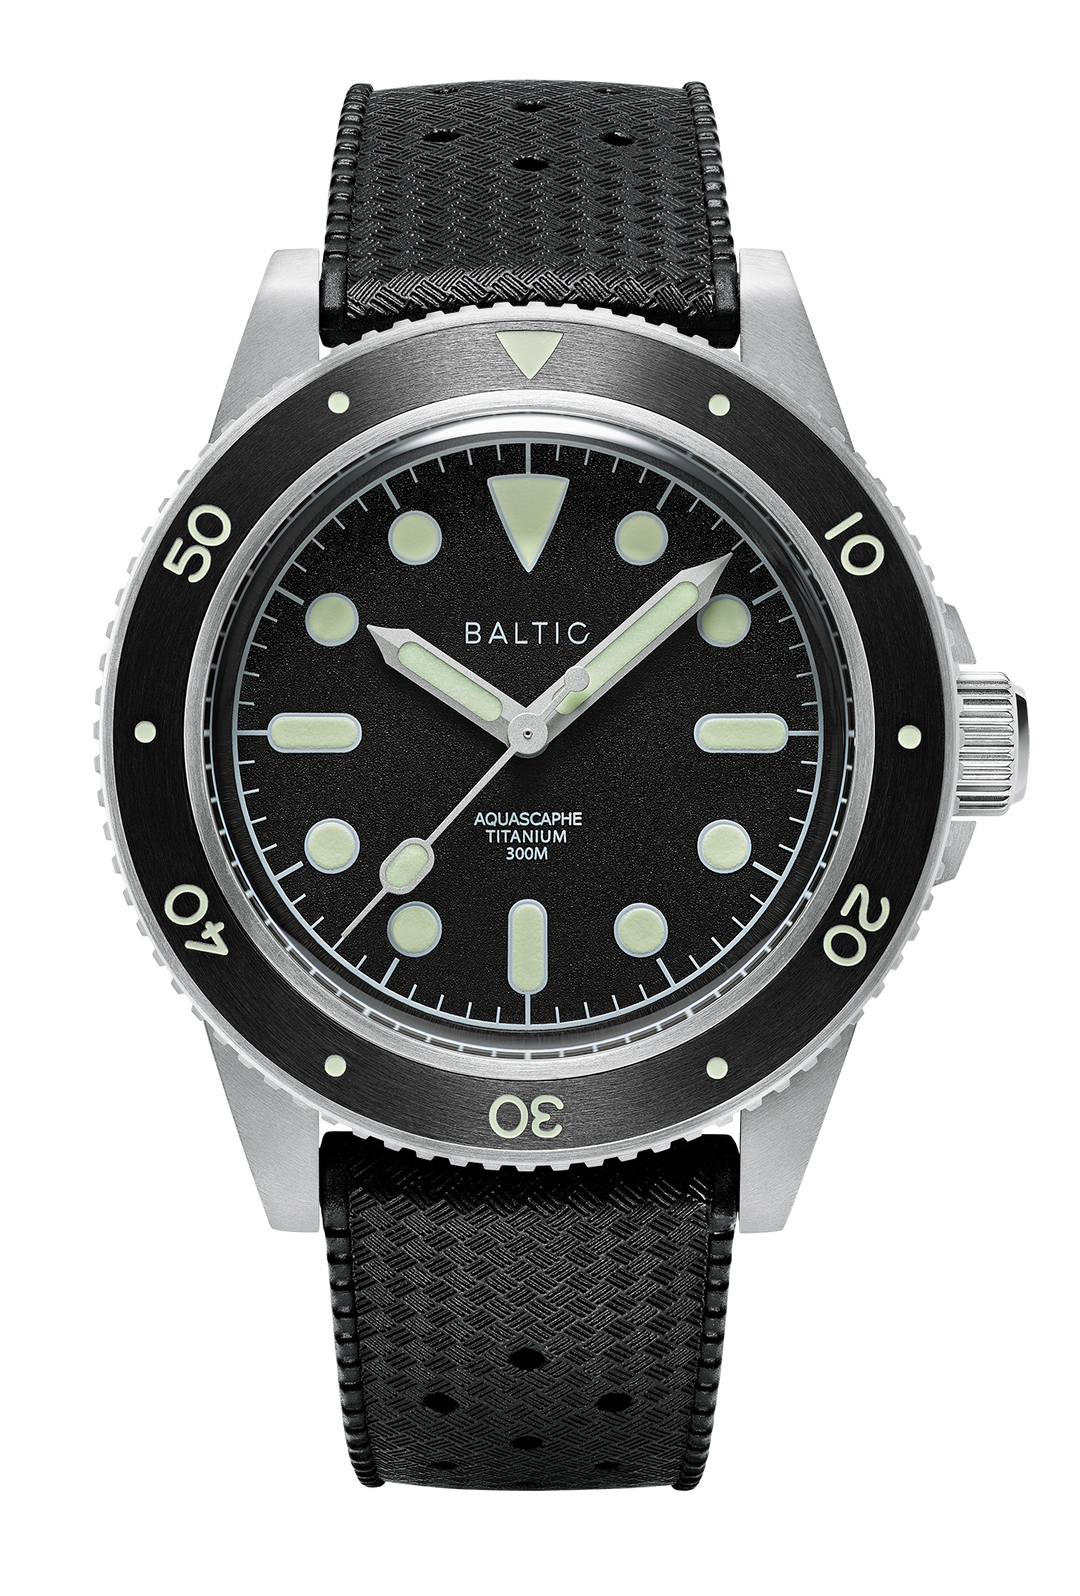 Aquascaphe Titanium collection - Baltic Watches